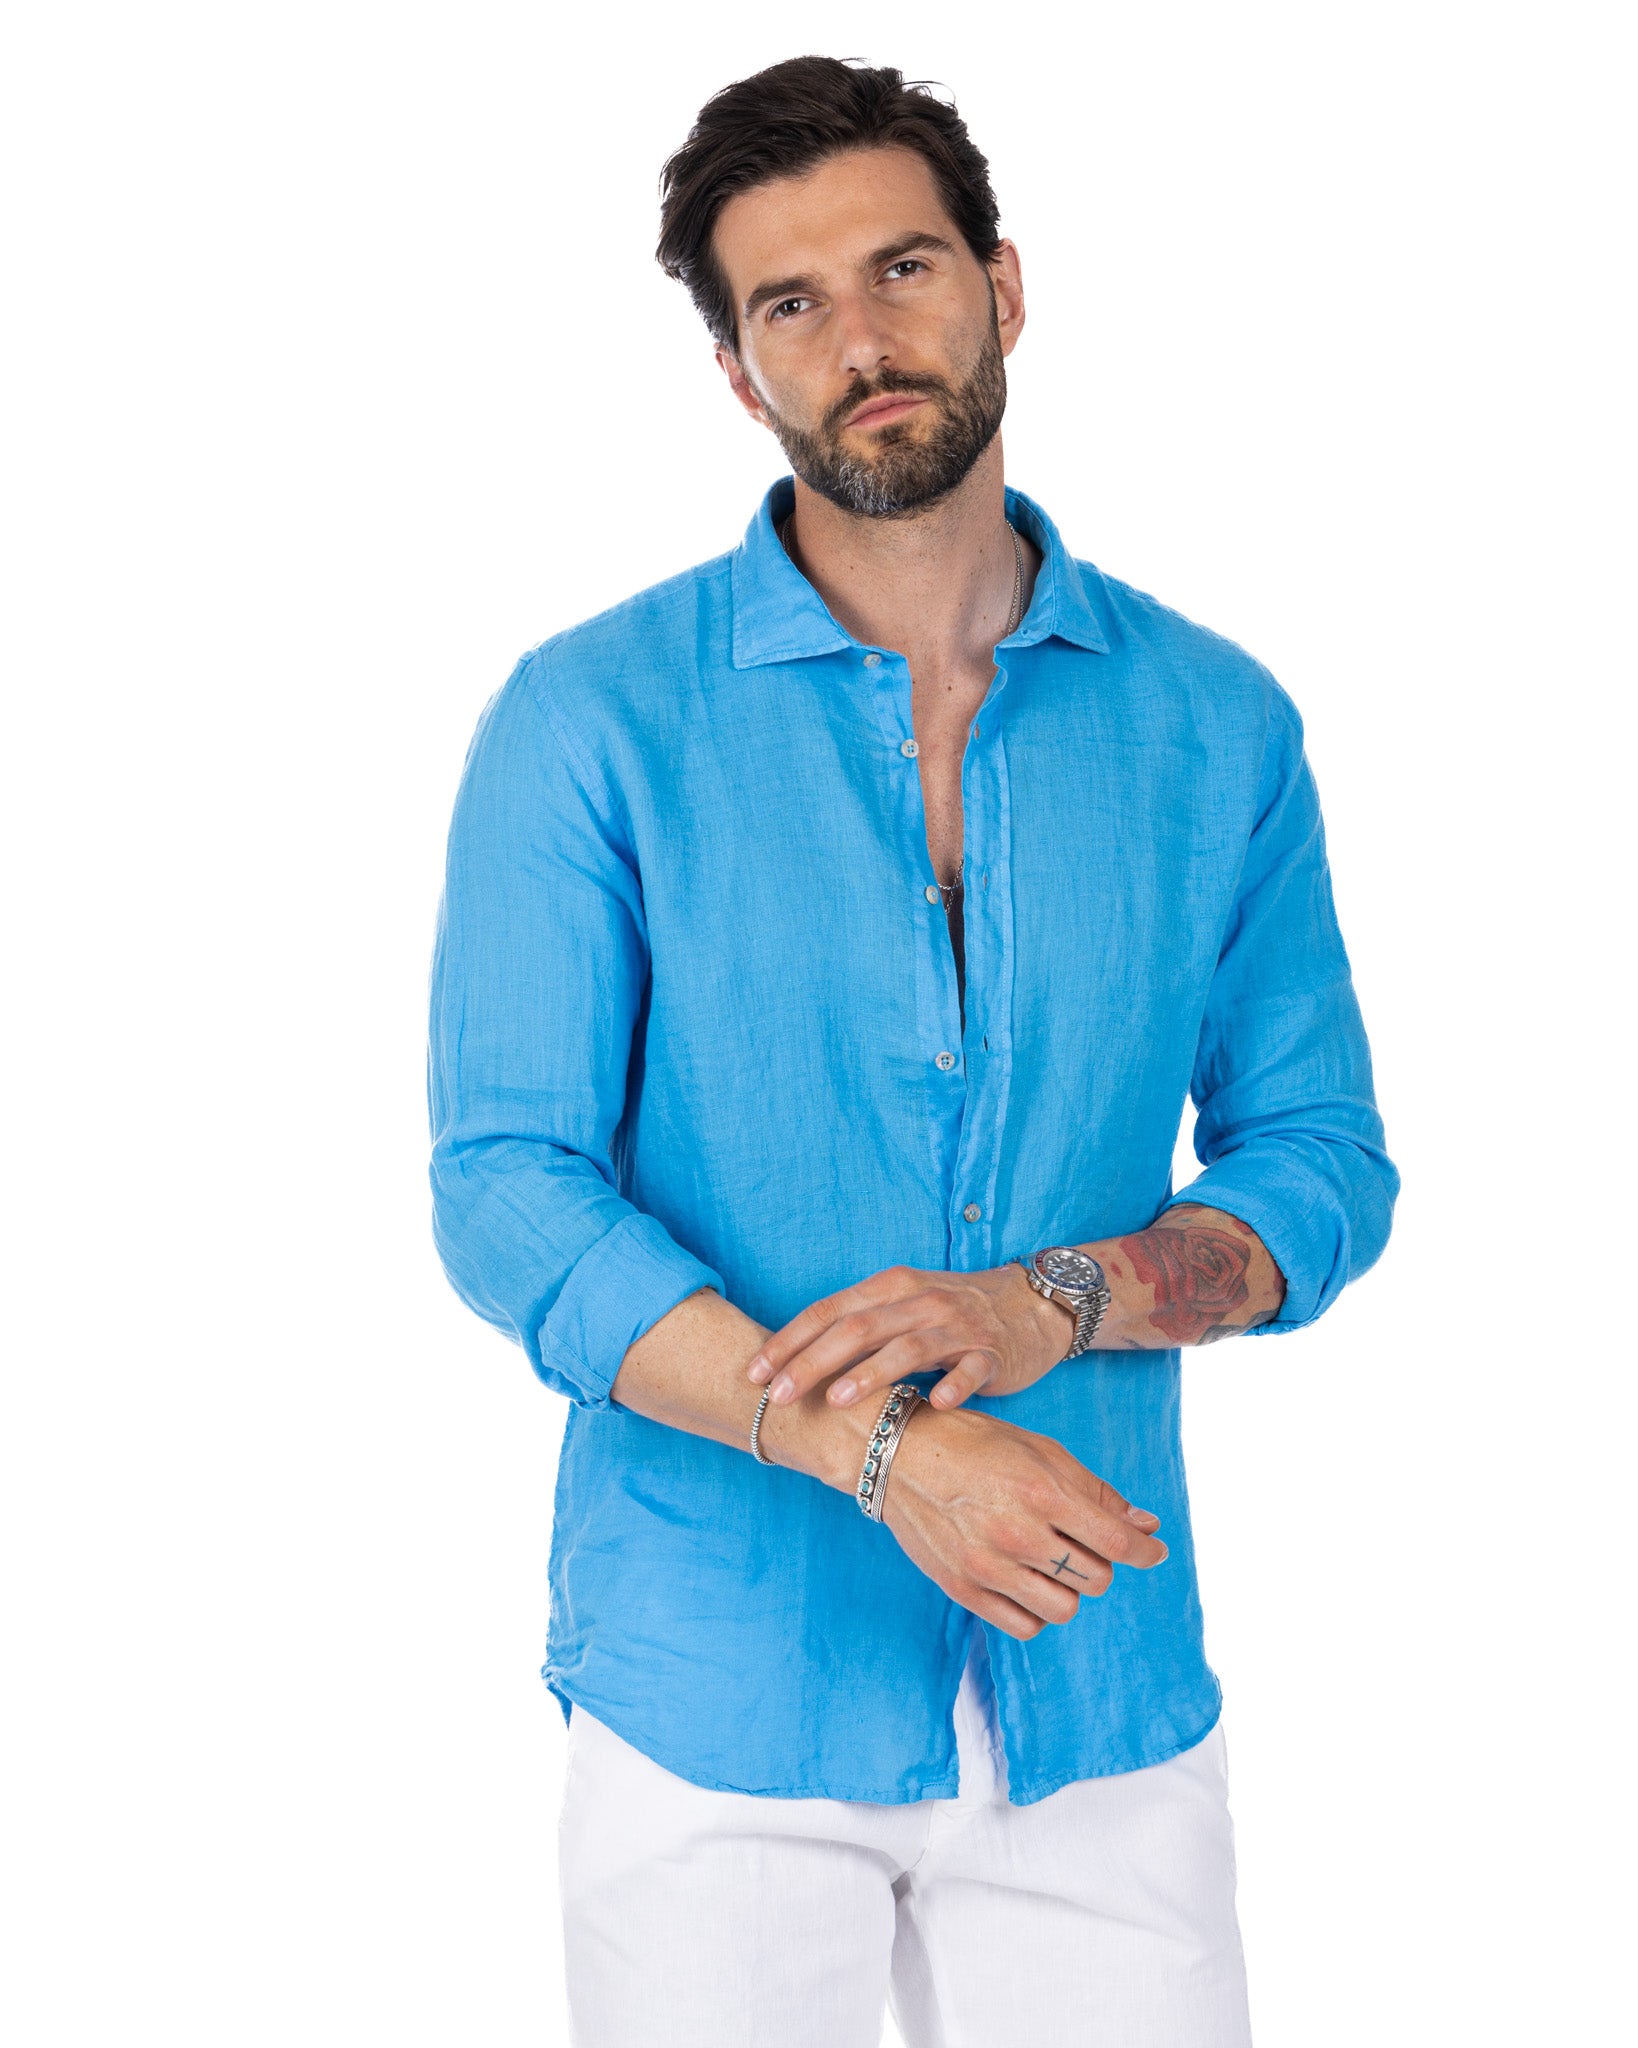 Montecarlo - turquoise pure linen shirt